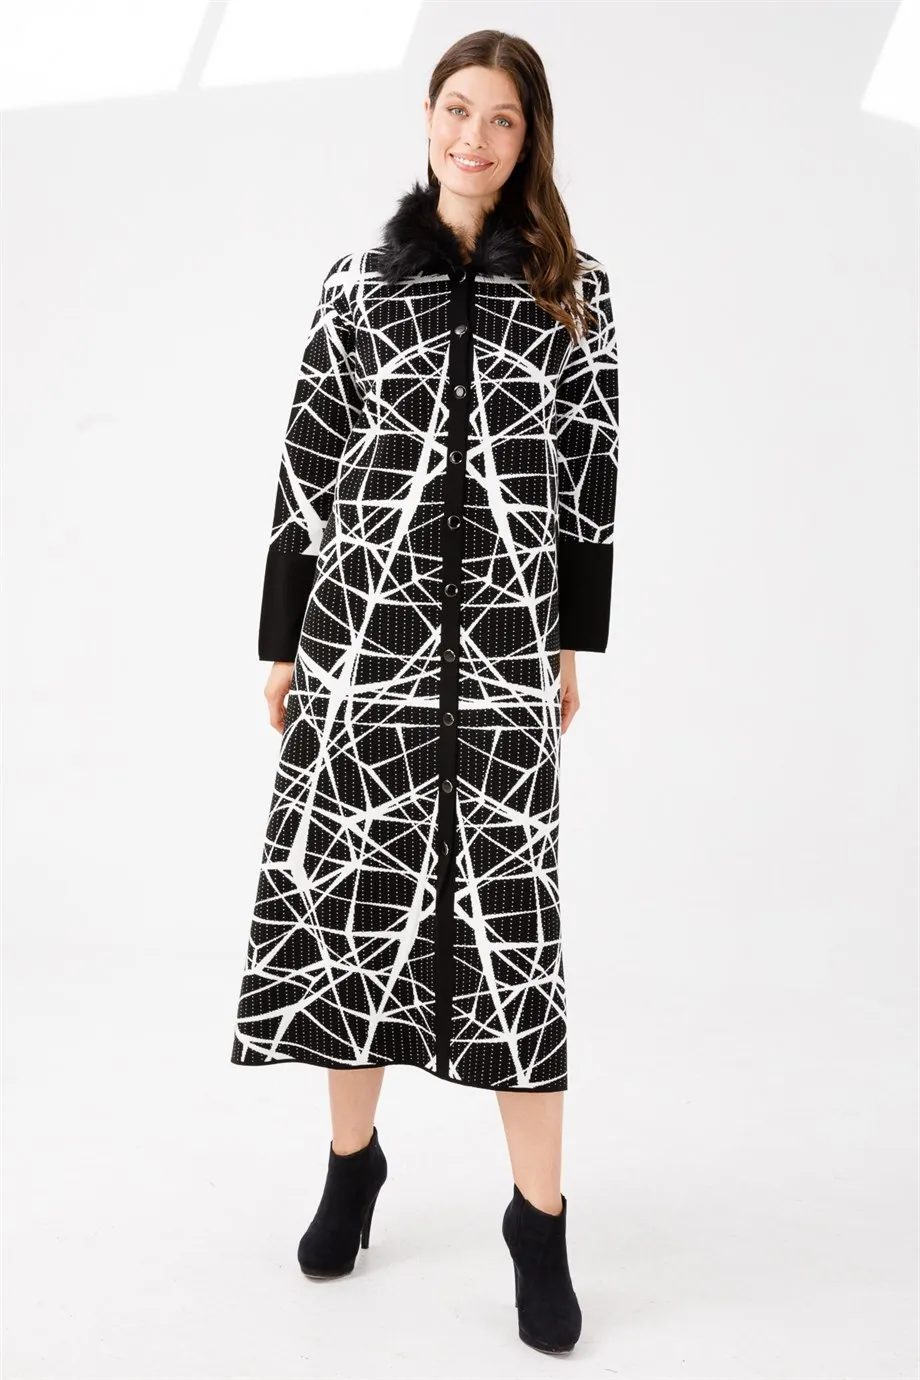 Geometric Pattern Full Sleeve Length Faux Fur Collar Black Color Knitwear Fabric Long Coat For Women New Fashion Winter Outwear